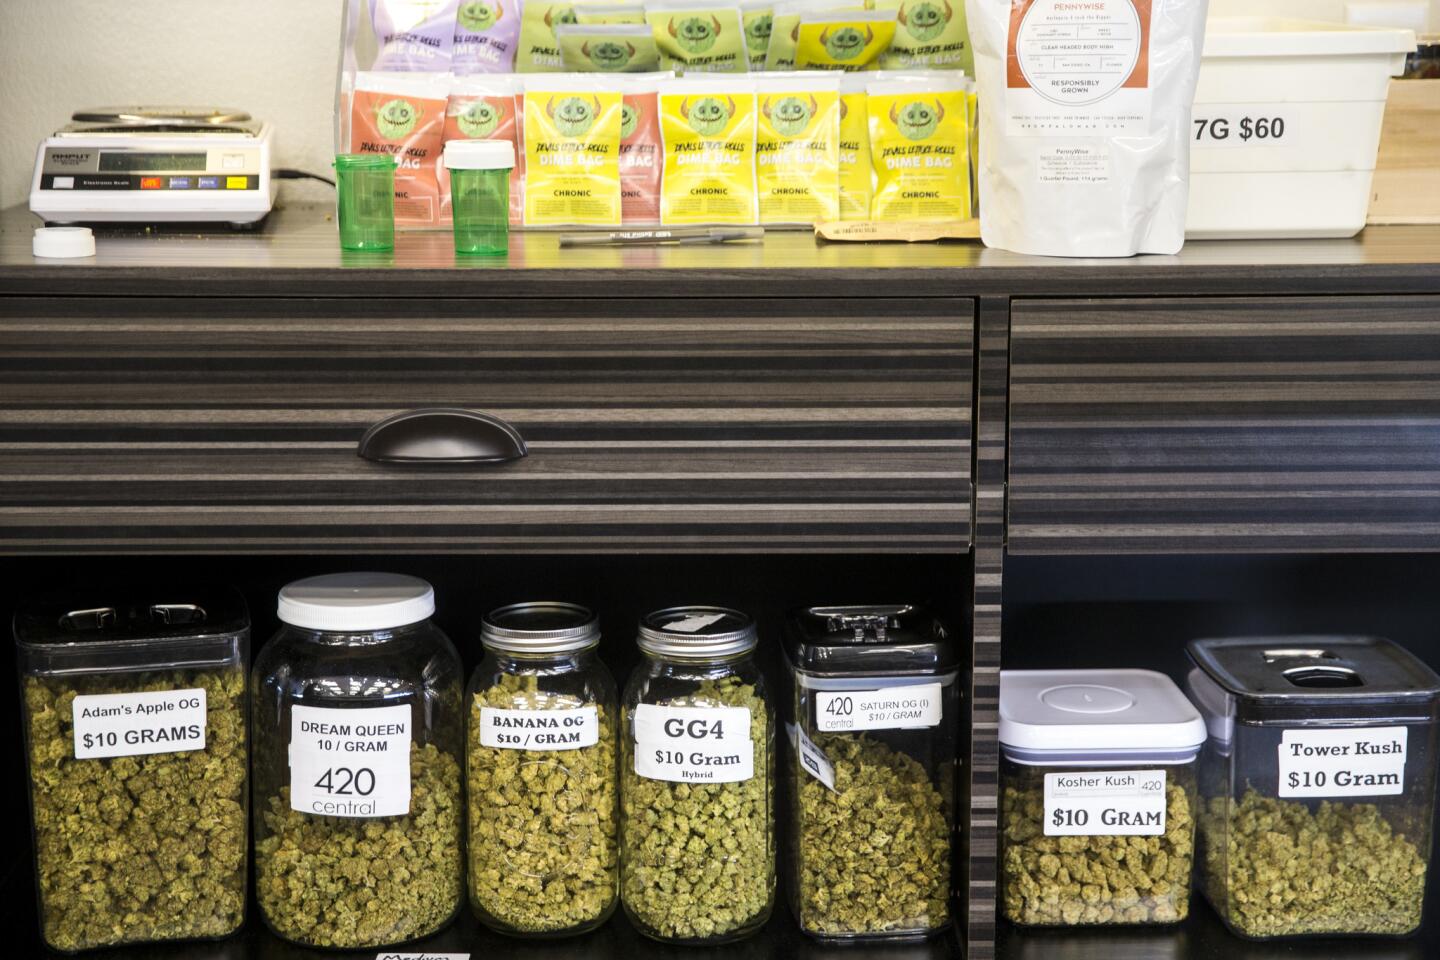 Shops prepare for legal recreational pot